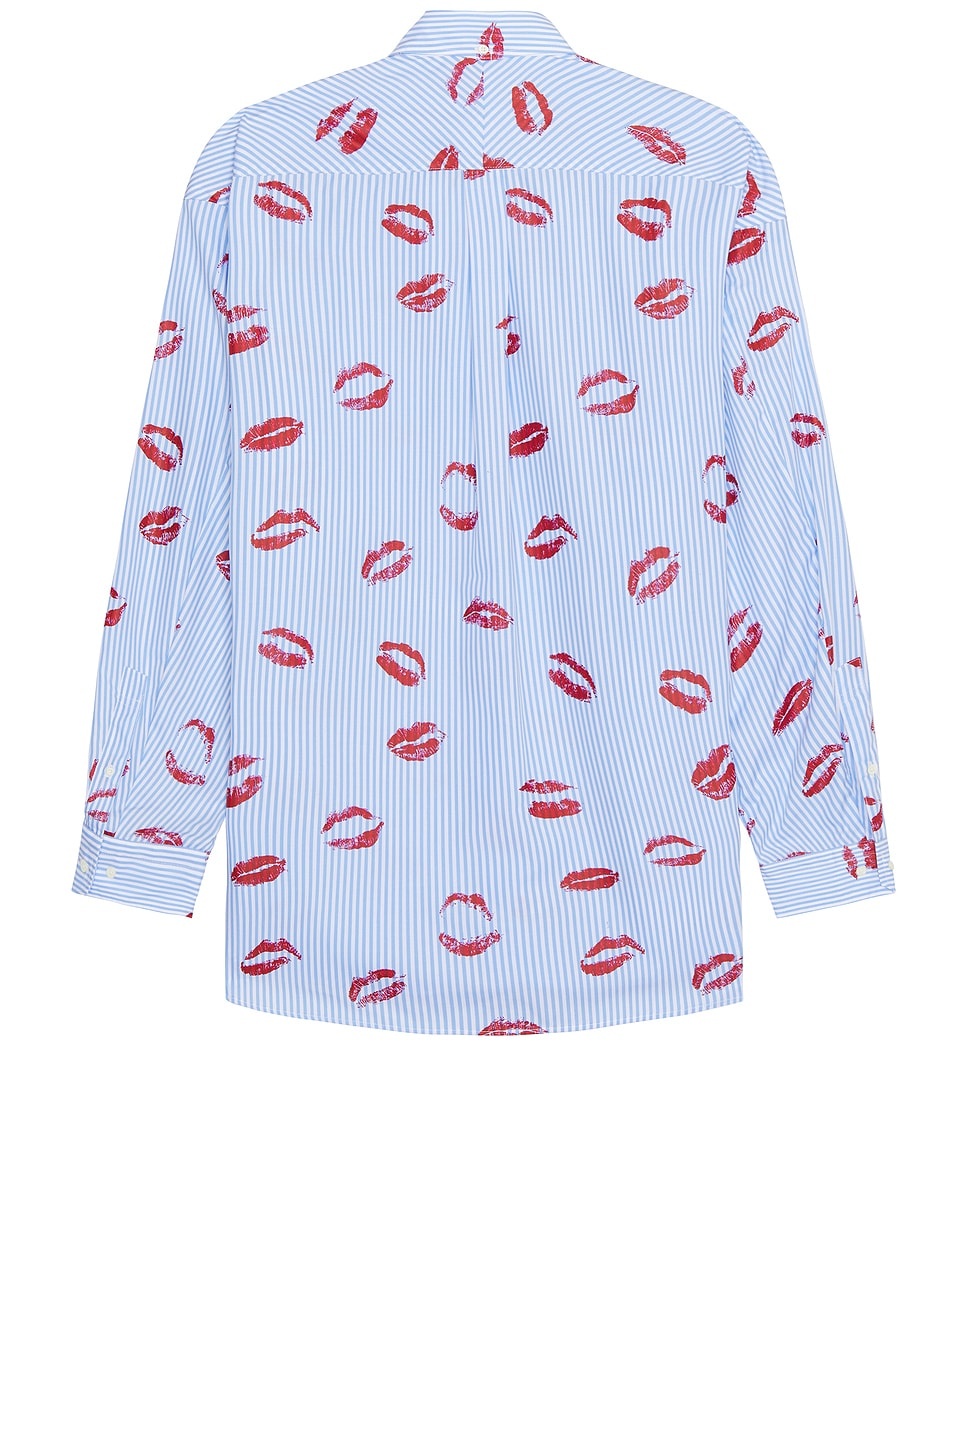 Back Gusset Lip Pattern Shirt - 2